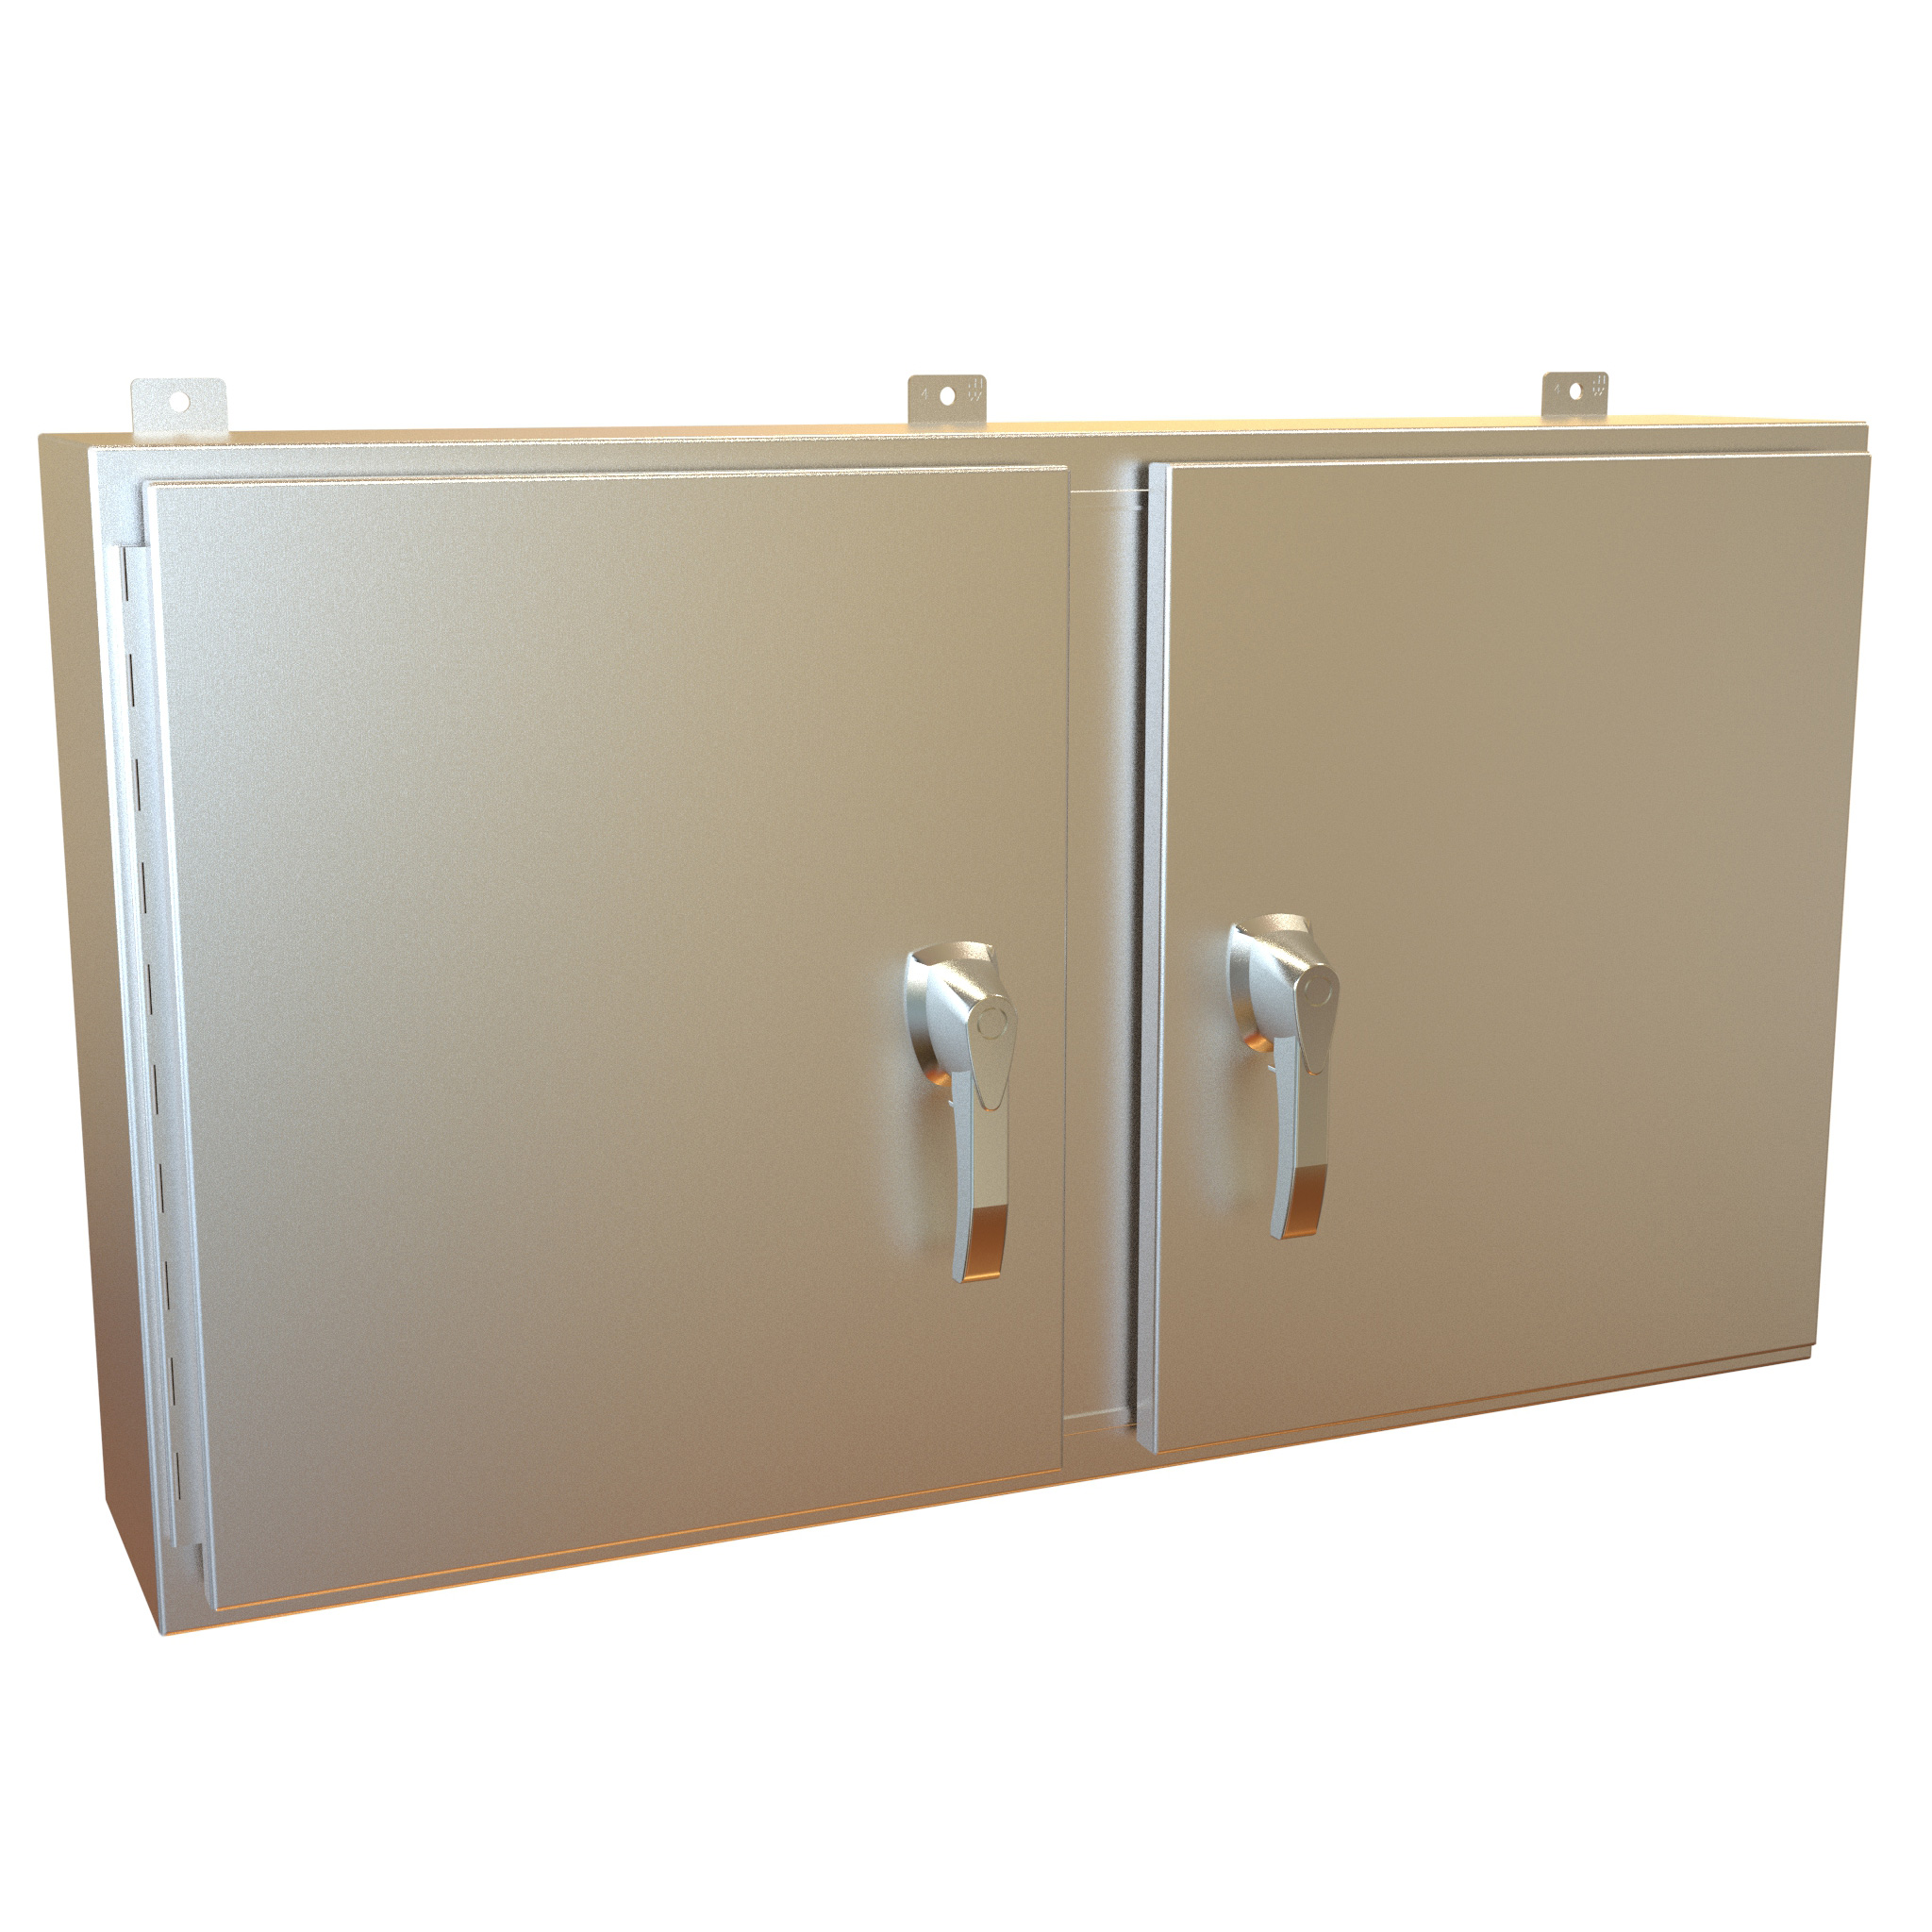 Hammond Manufacturing - Type 4X Stainless Steel Two Door Wallmount Enclosure